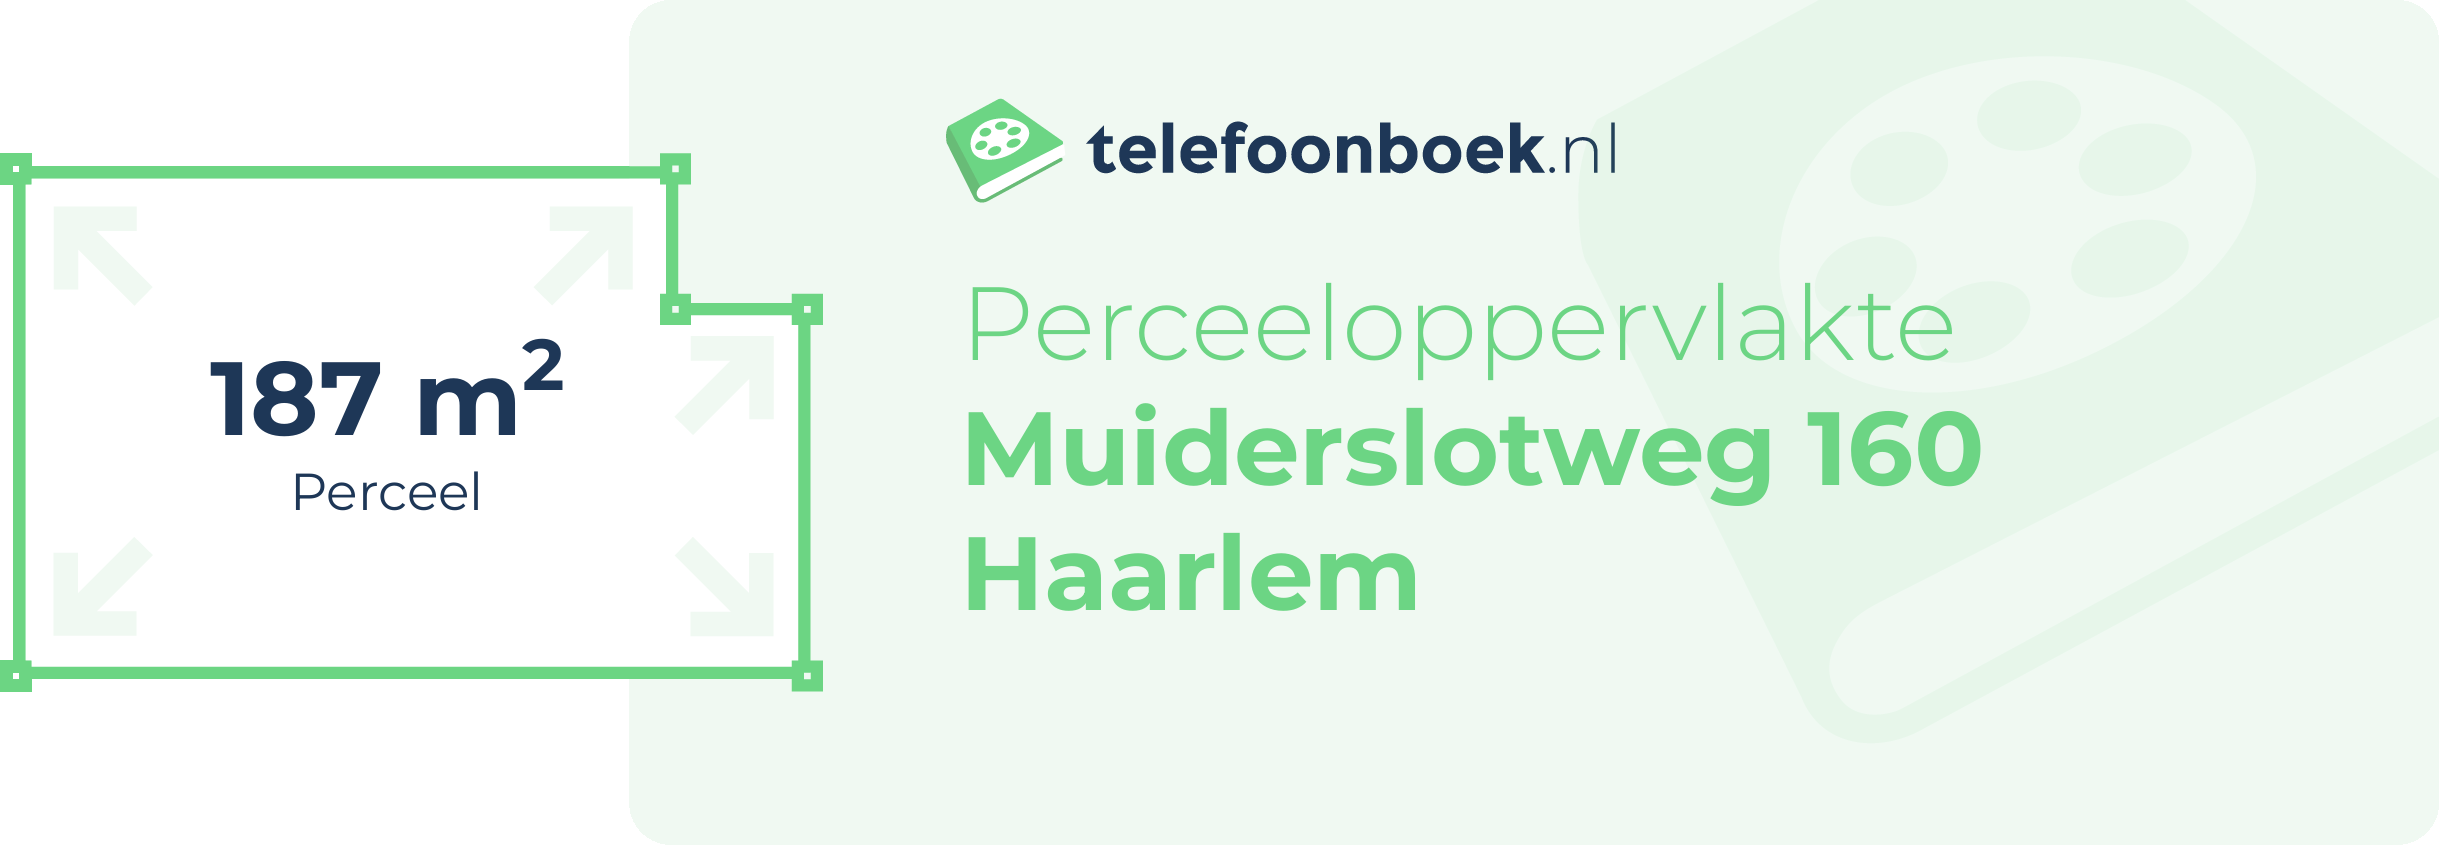 Perceeloppervlakte Muiderslotweg 160 Haarlem